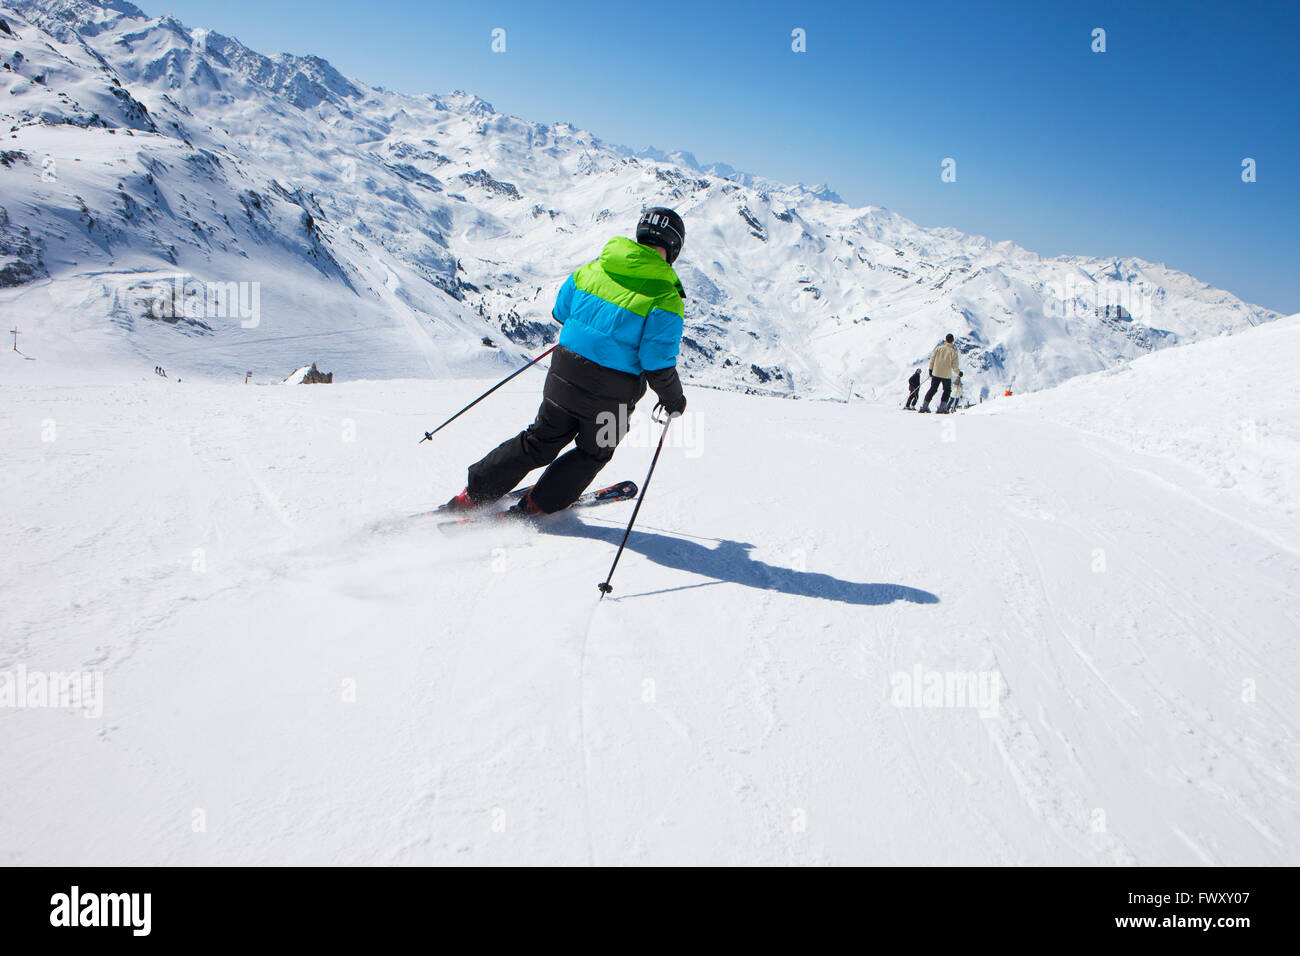 France, Val Thorens, Man skiing on mountain slope Stock Photo